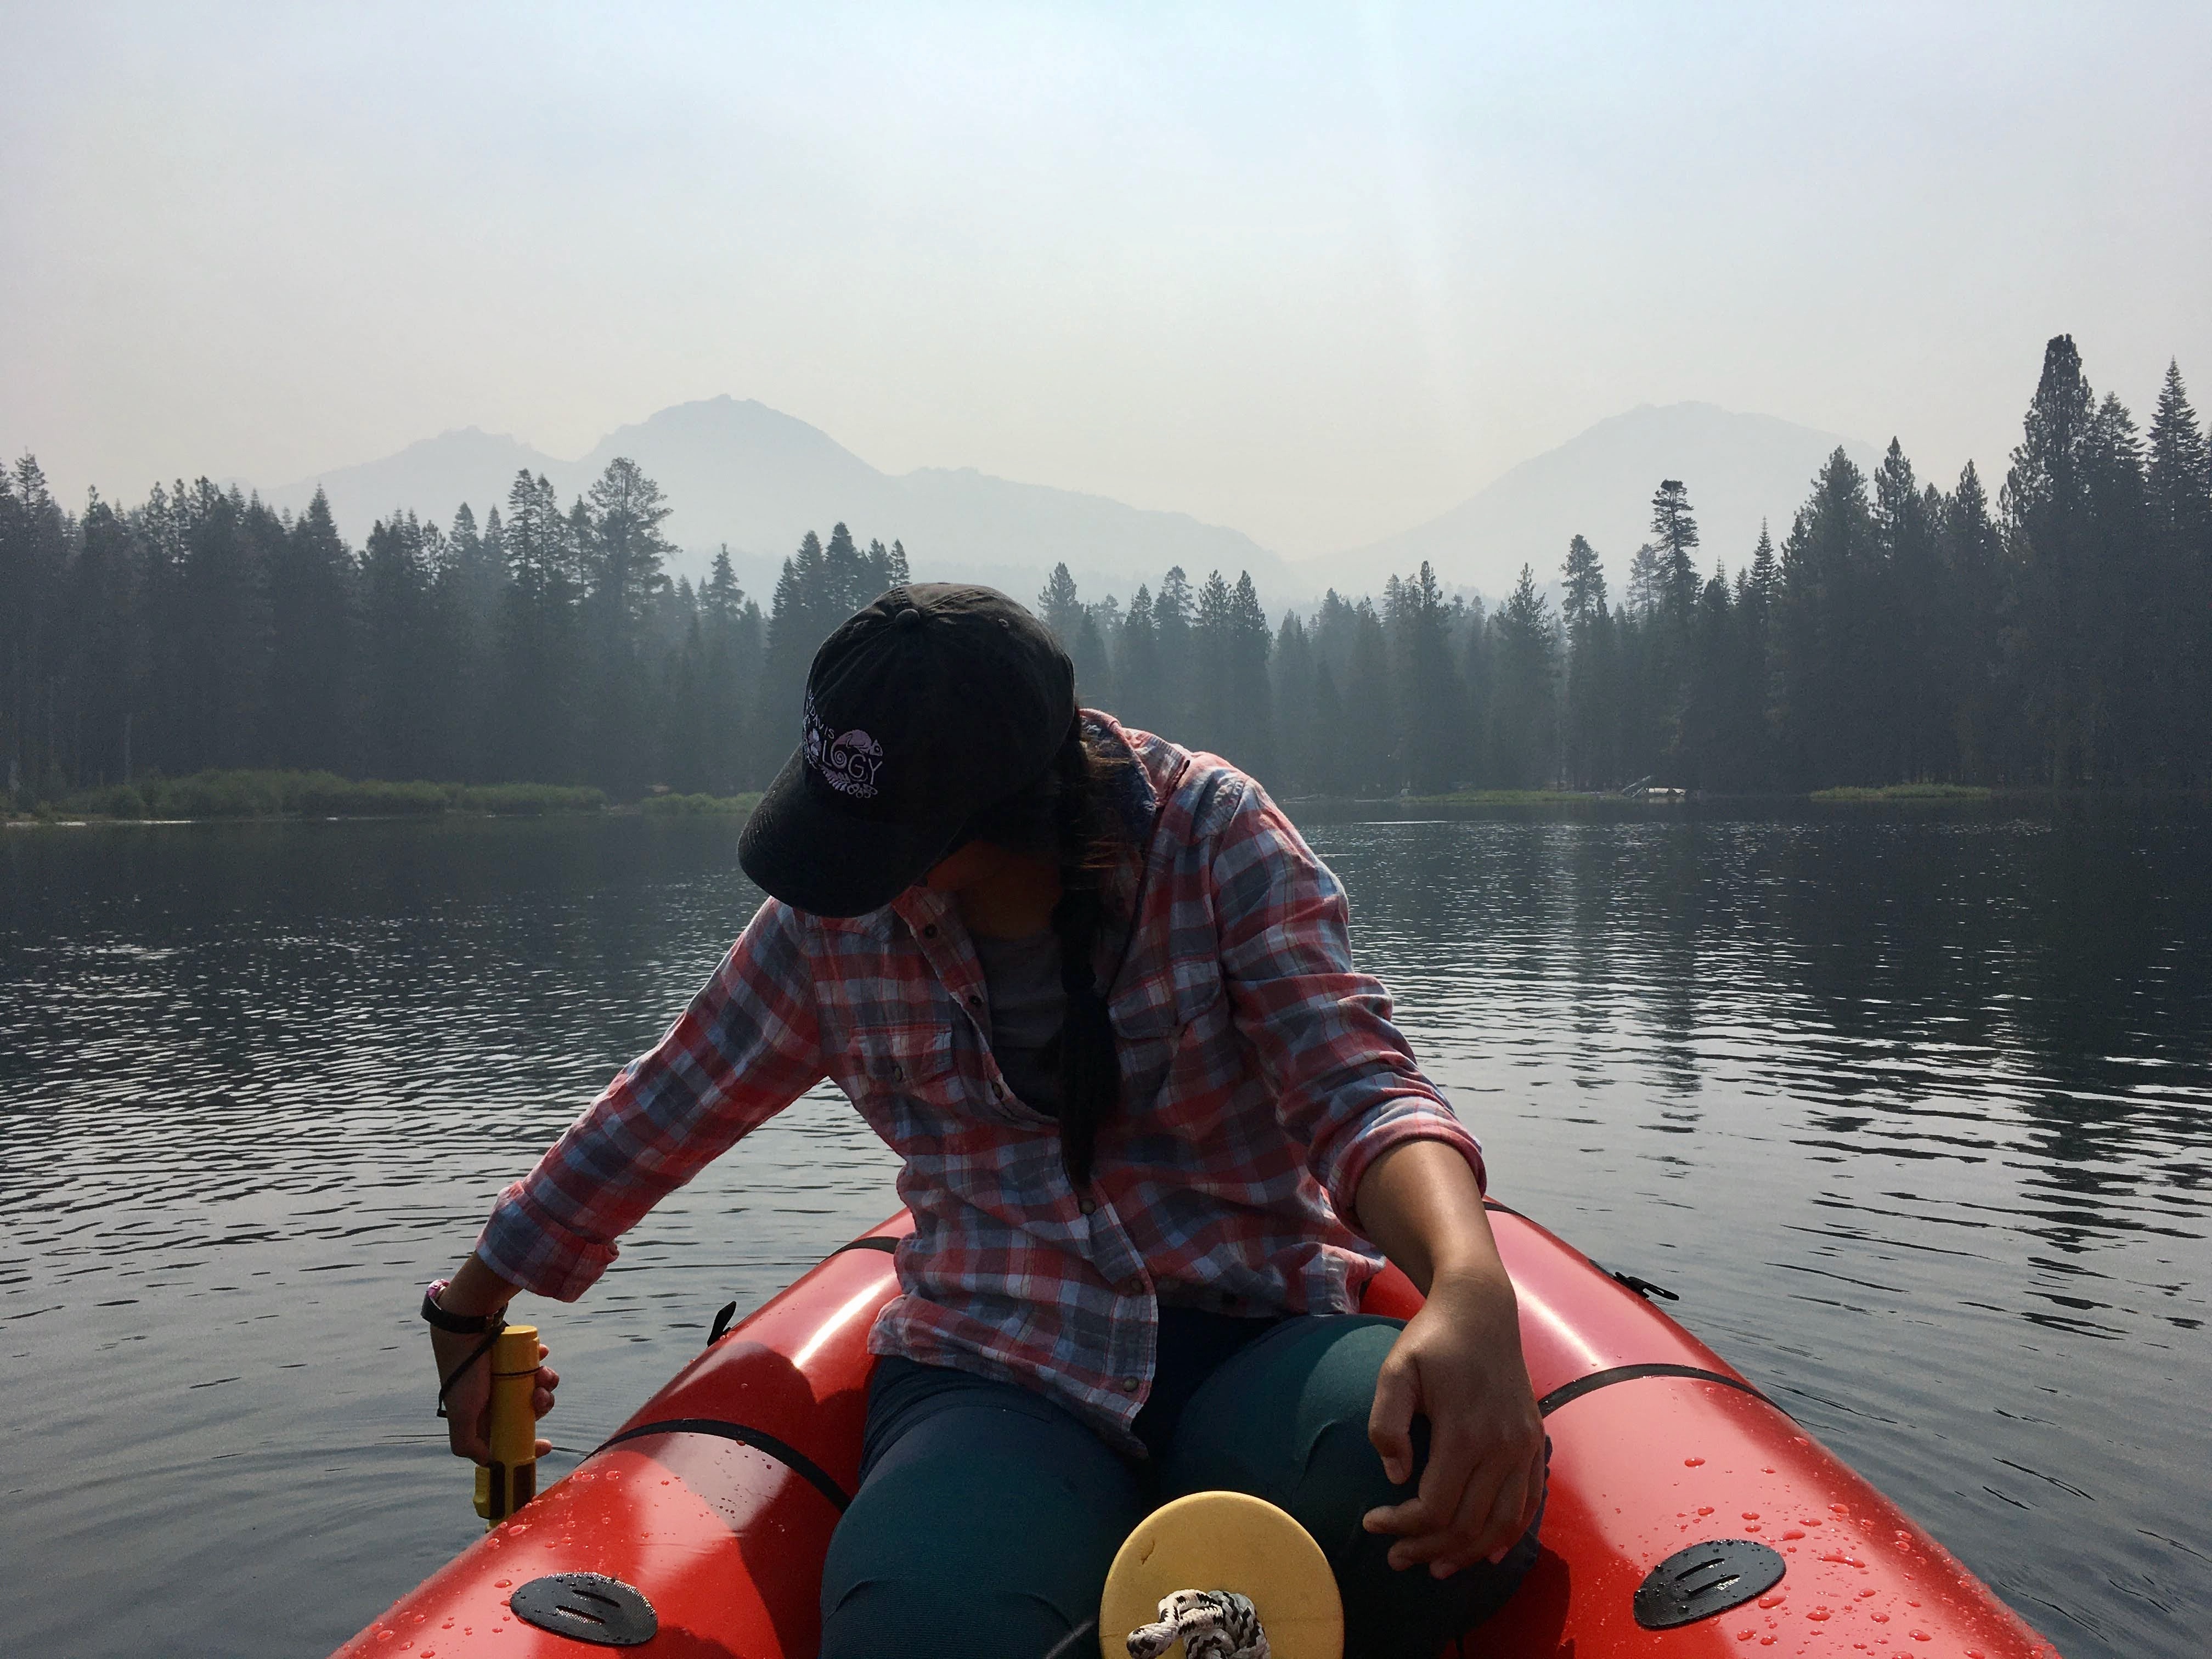 Ecologist MJ Farrugia on Manzanita Lake in a red kayak leans over to sample water under smoky skies.